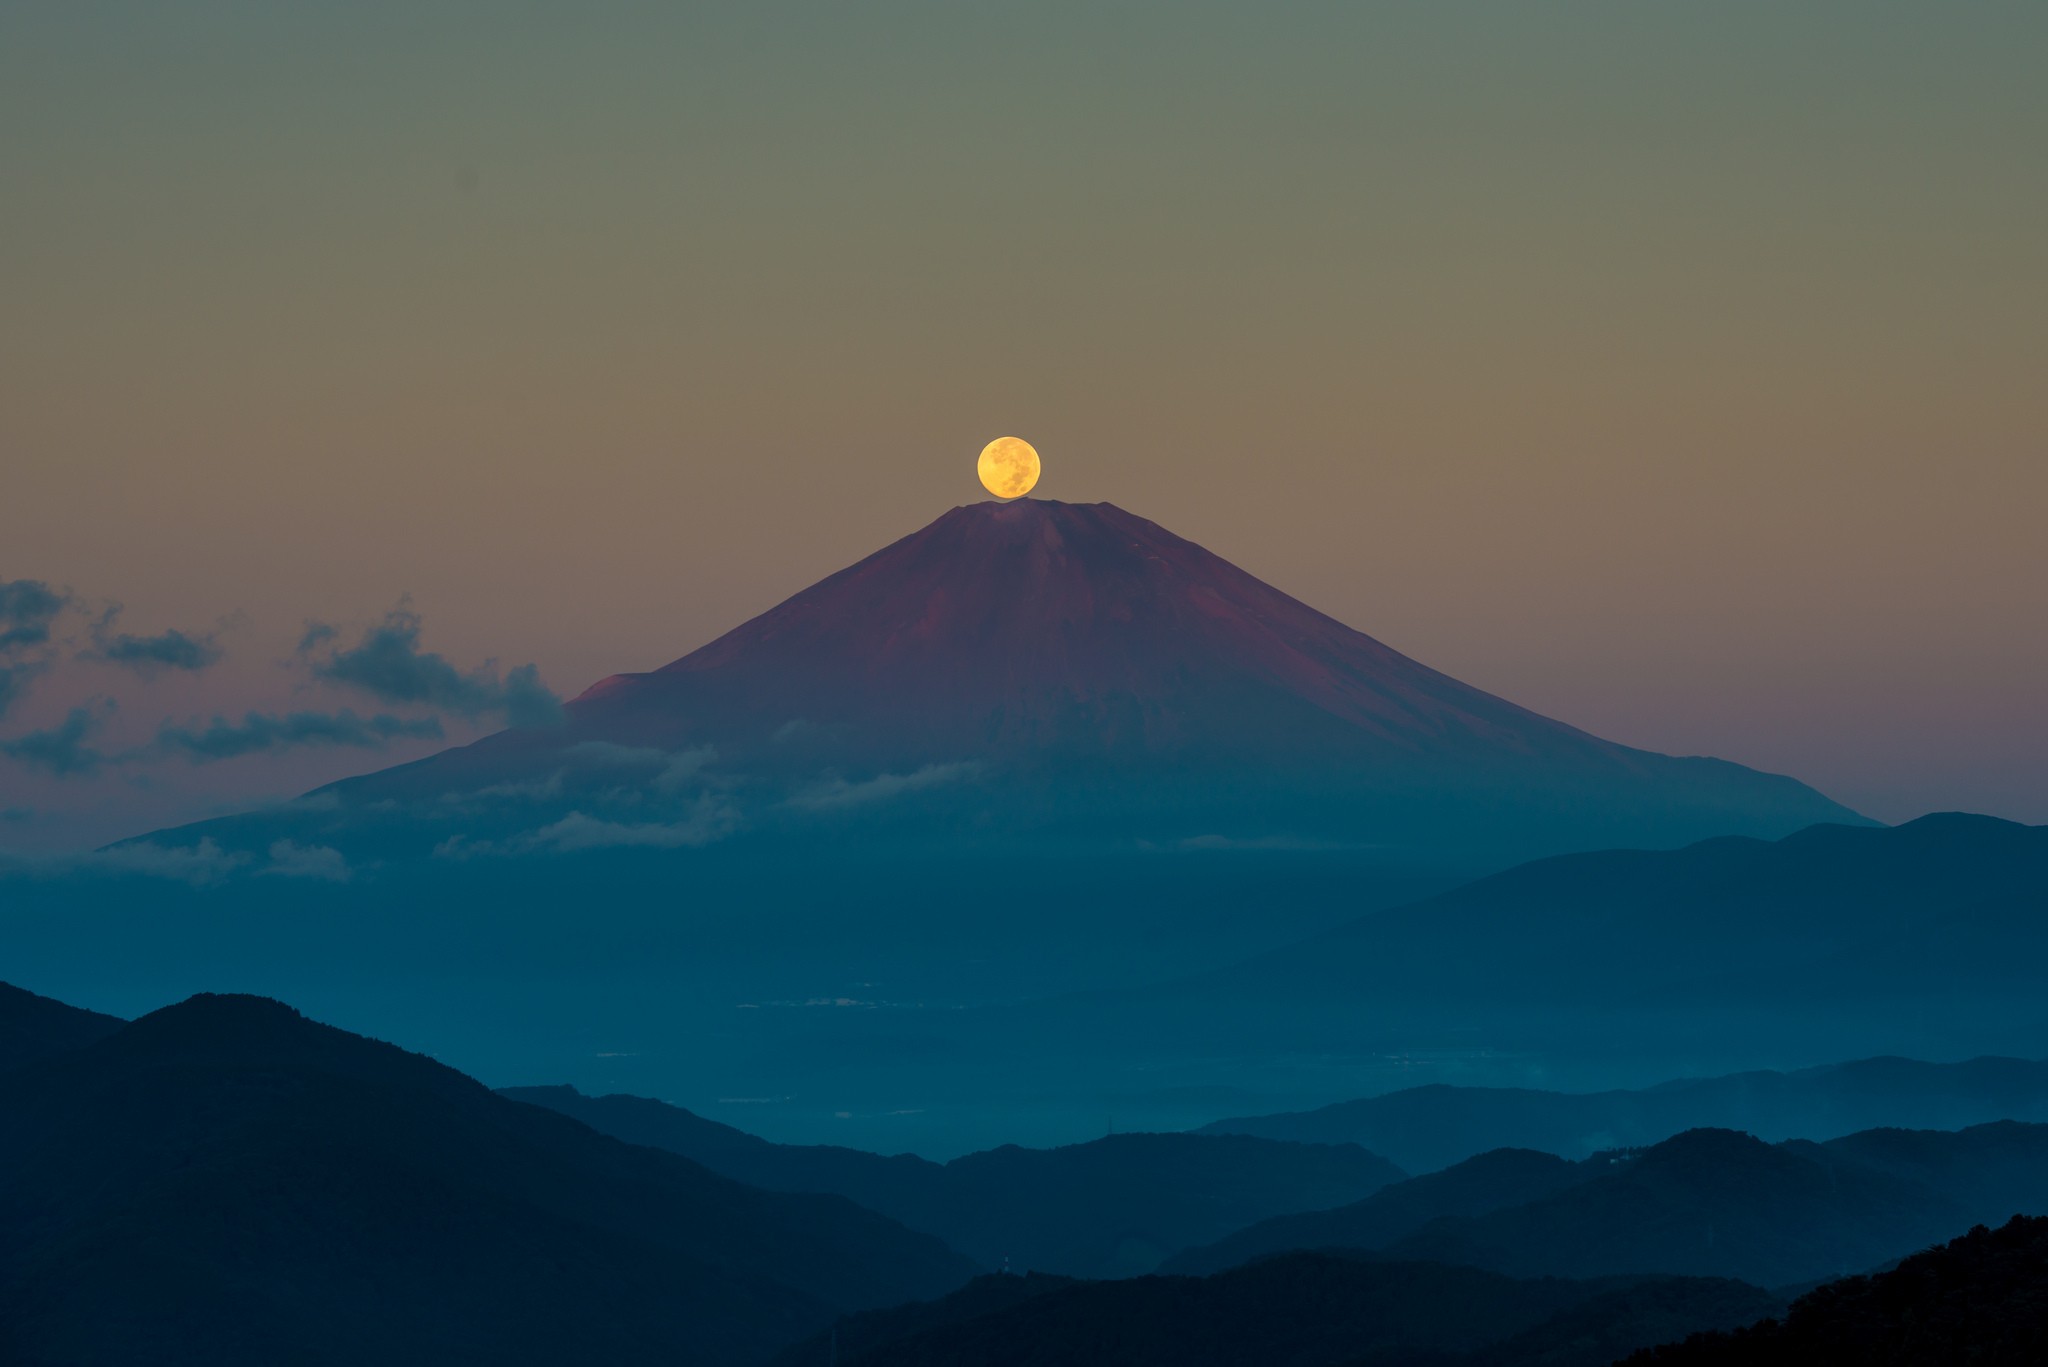 General 2048x1367 nature mountains Moon Mount Fuji Japan landscape Asia volcano